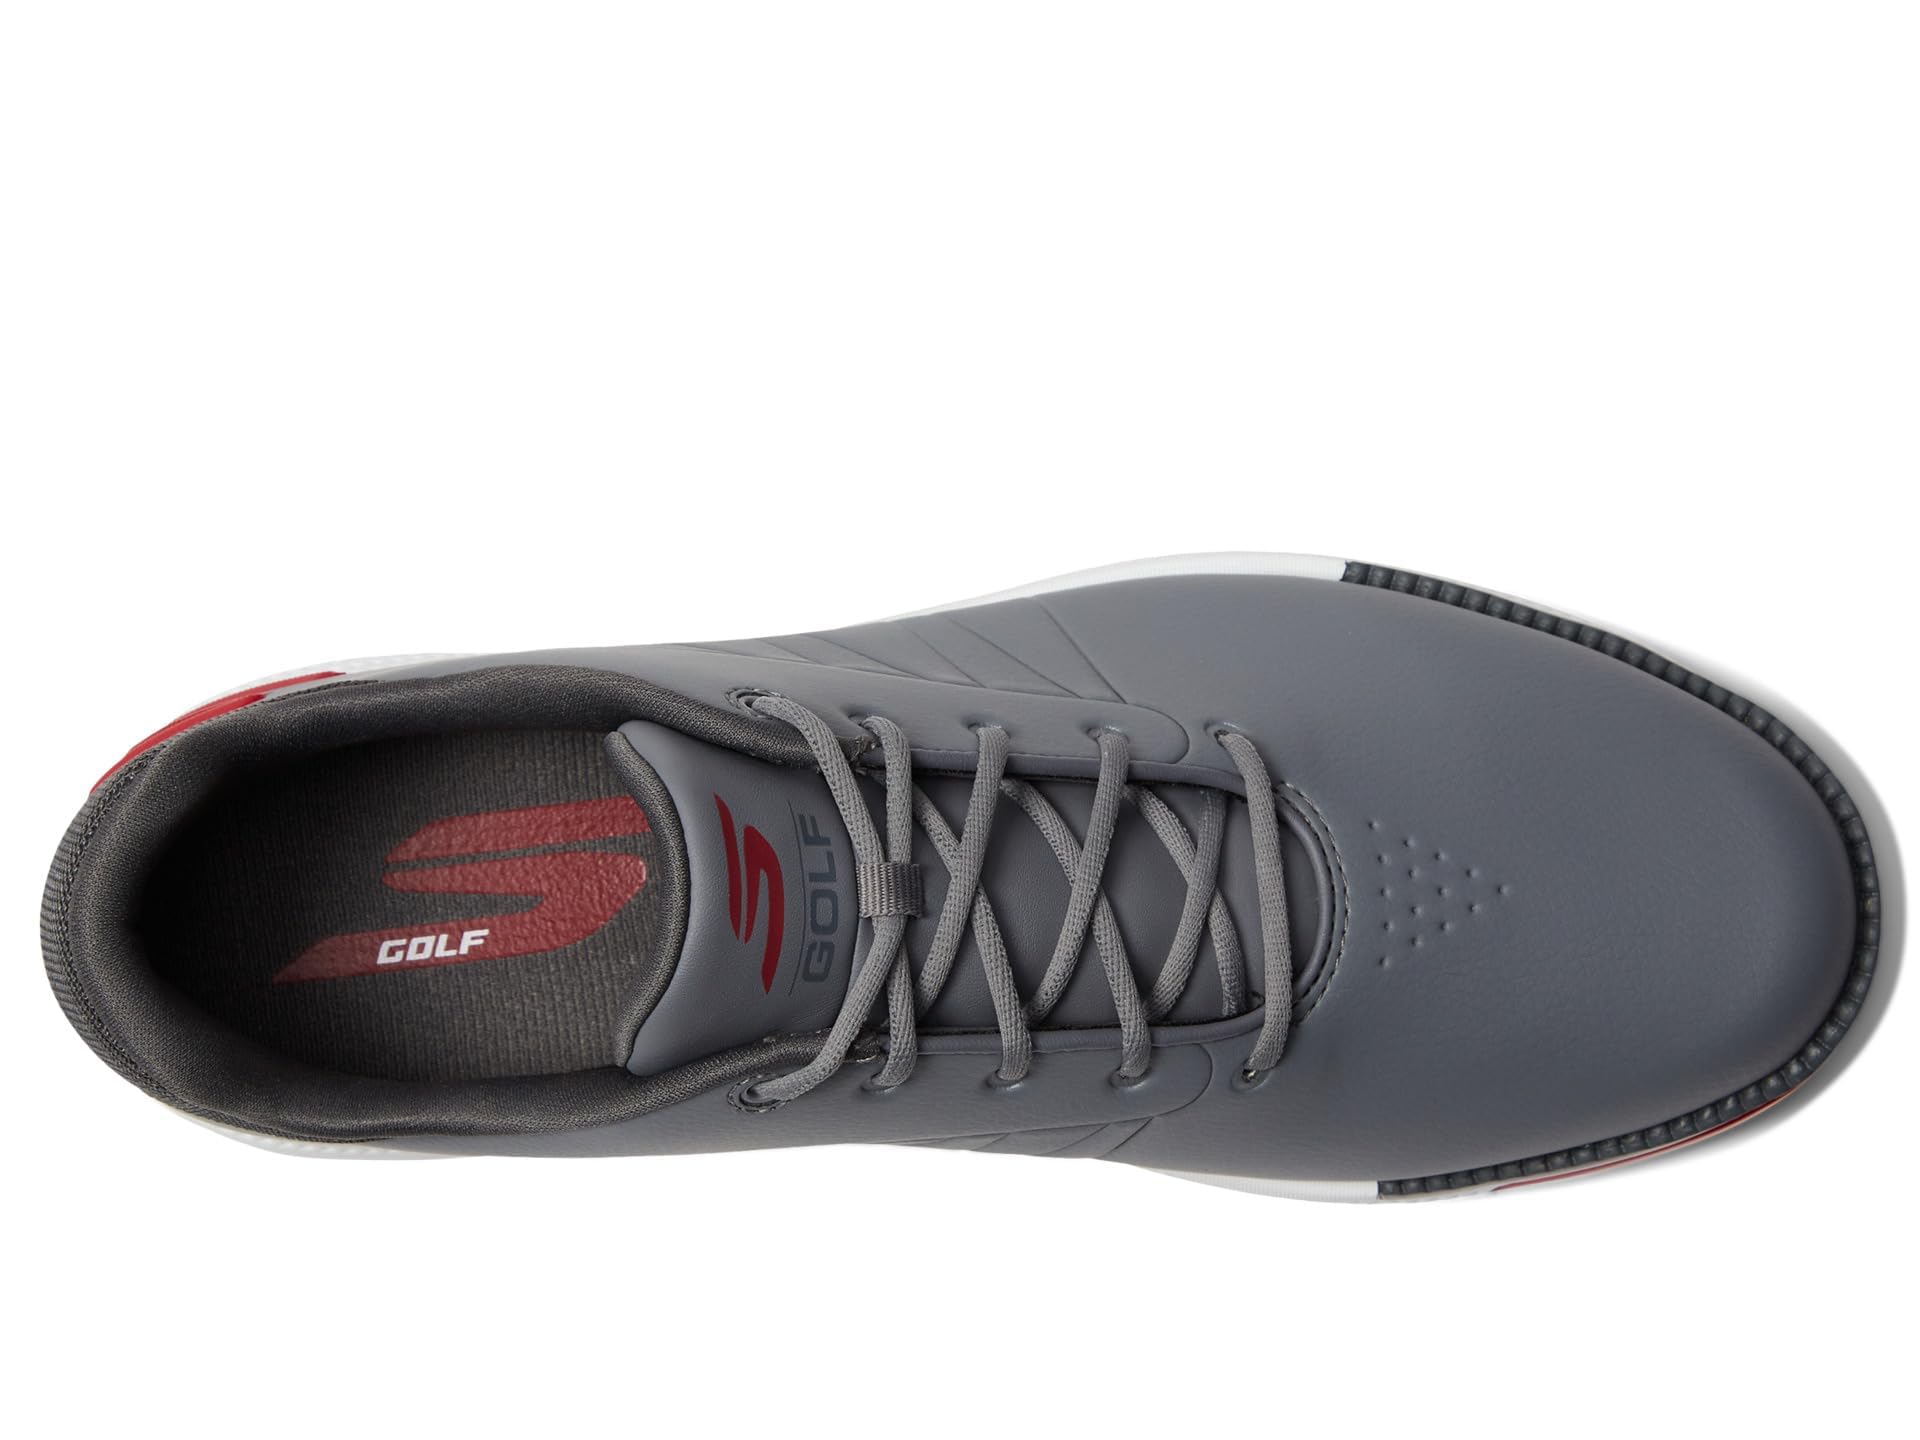 Skechers Men's Tempo Spikeless Waterproof Lightweight Golf Shoe Sneaker